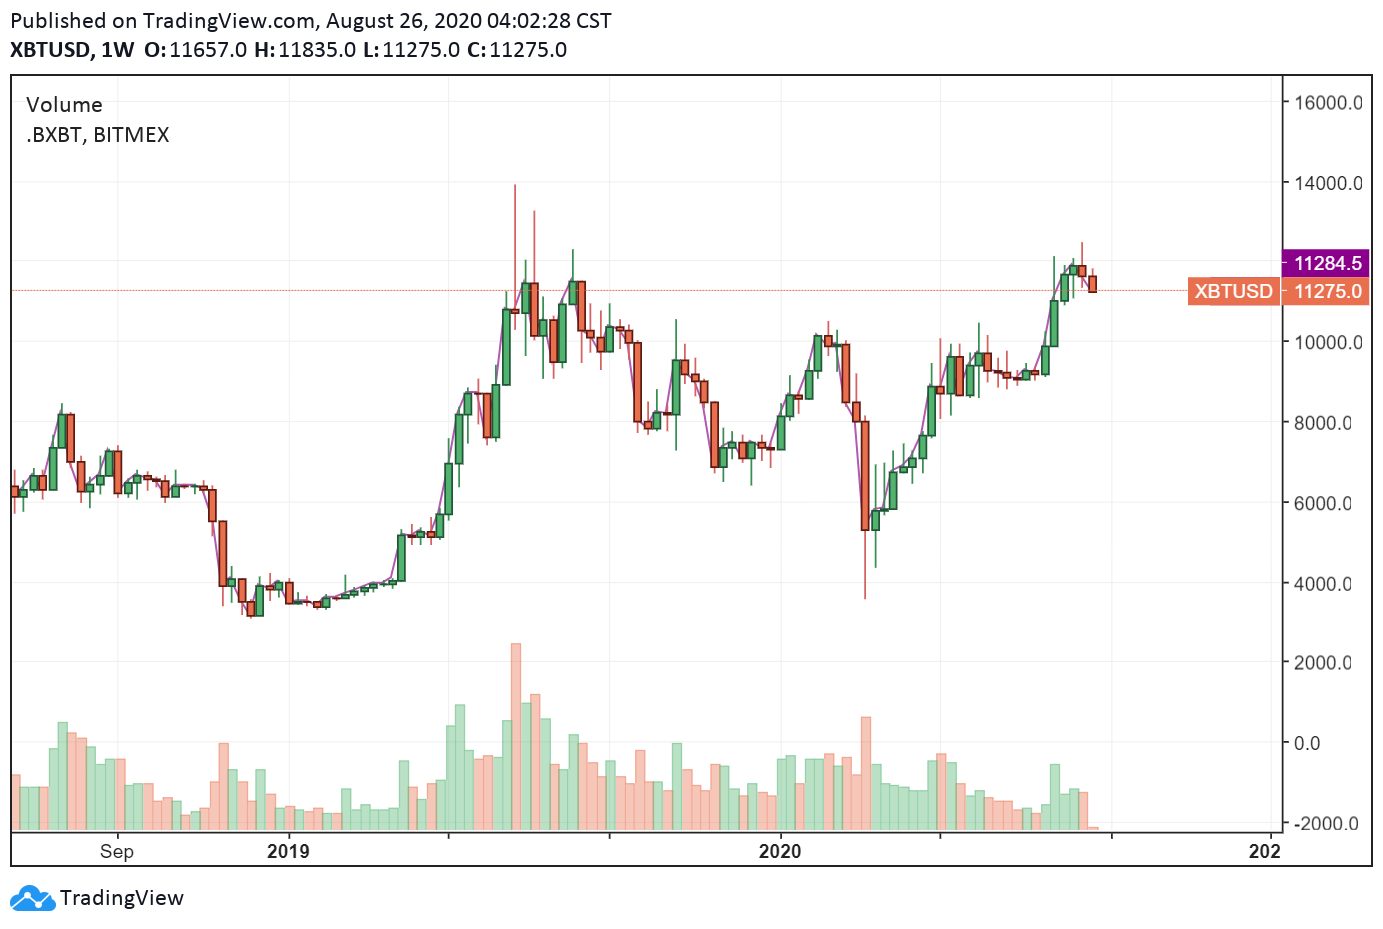 XBT-USD 1 week chart. Source: TradingView.com